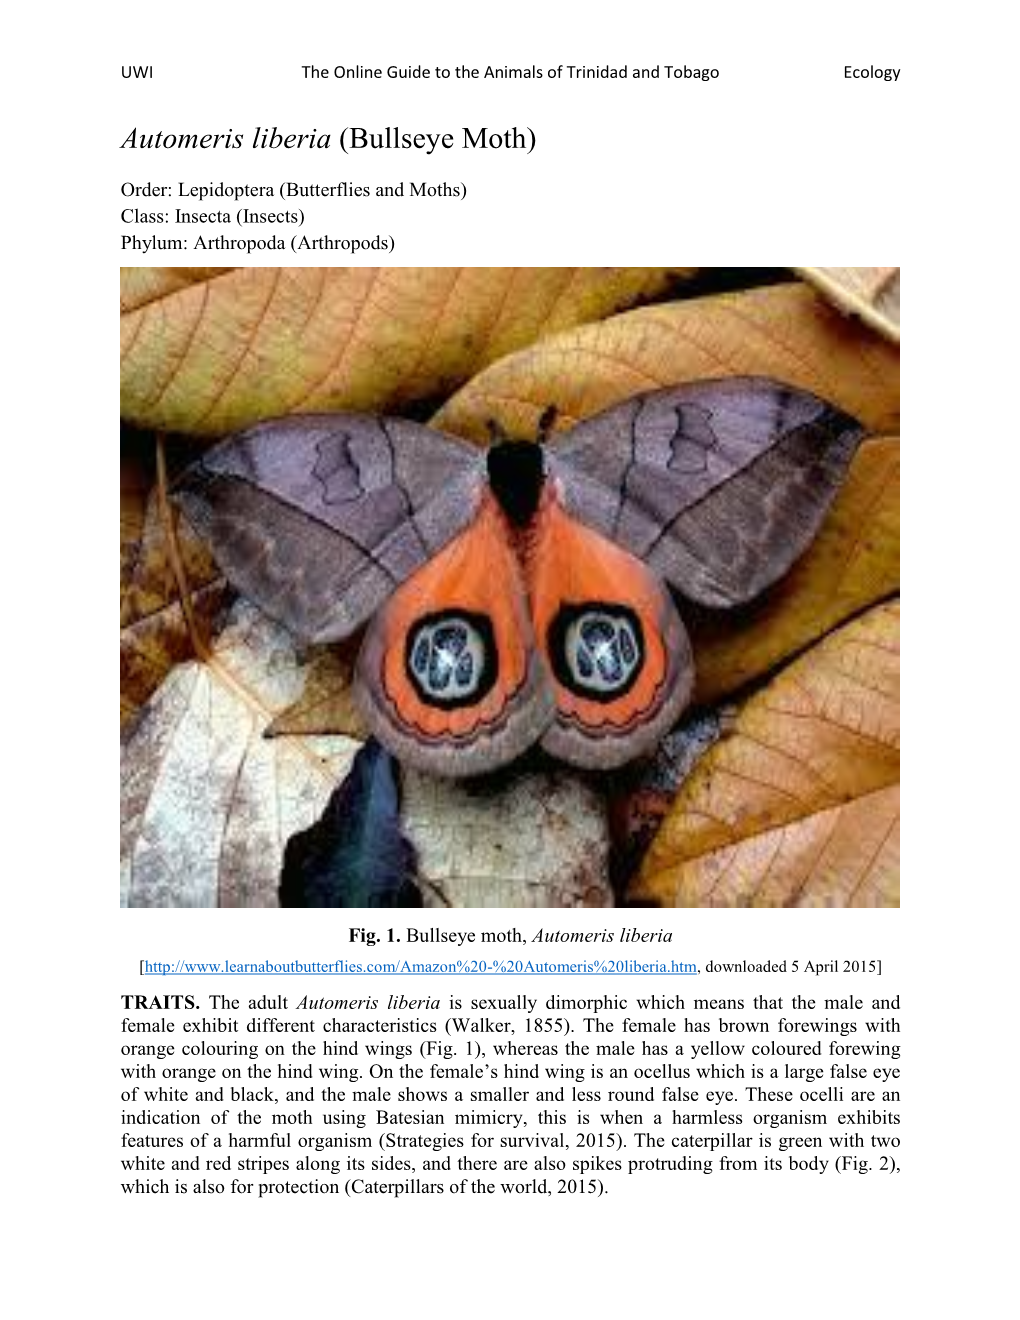 Automeris Liberia (Bullseye Moth)